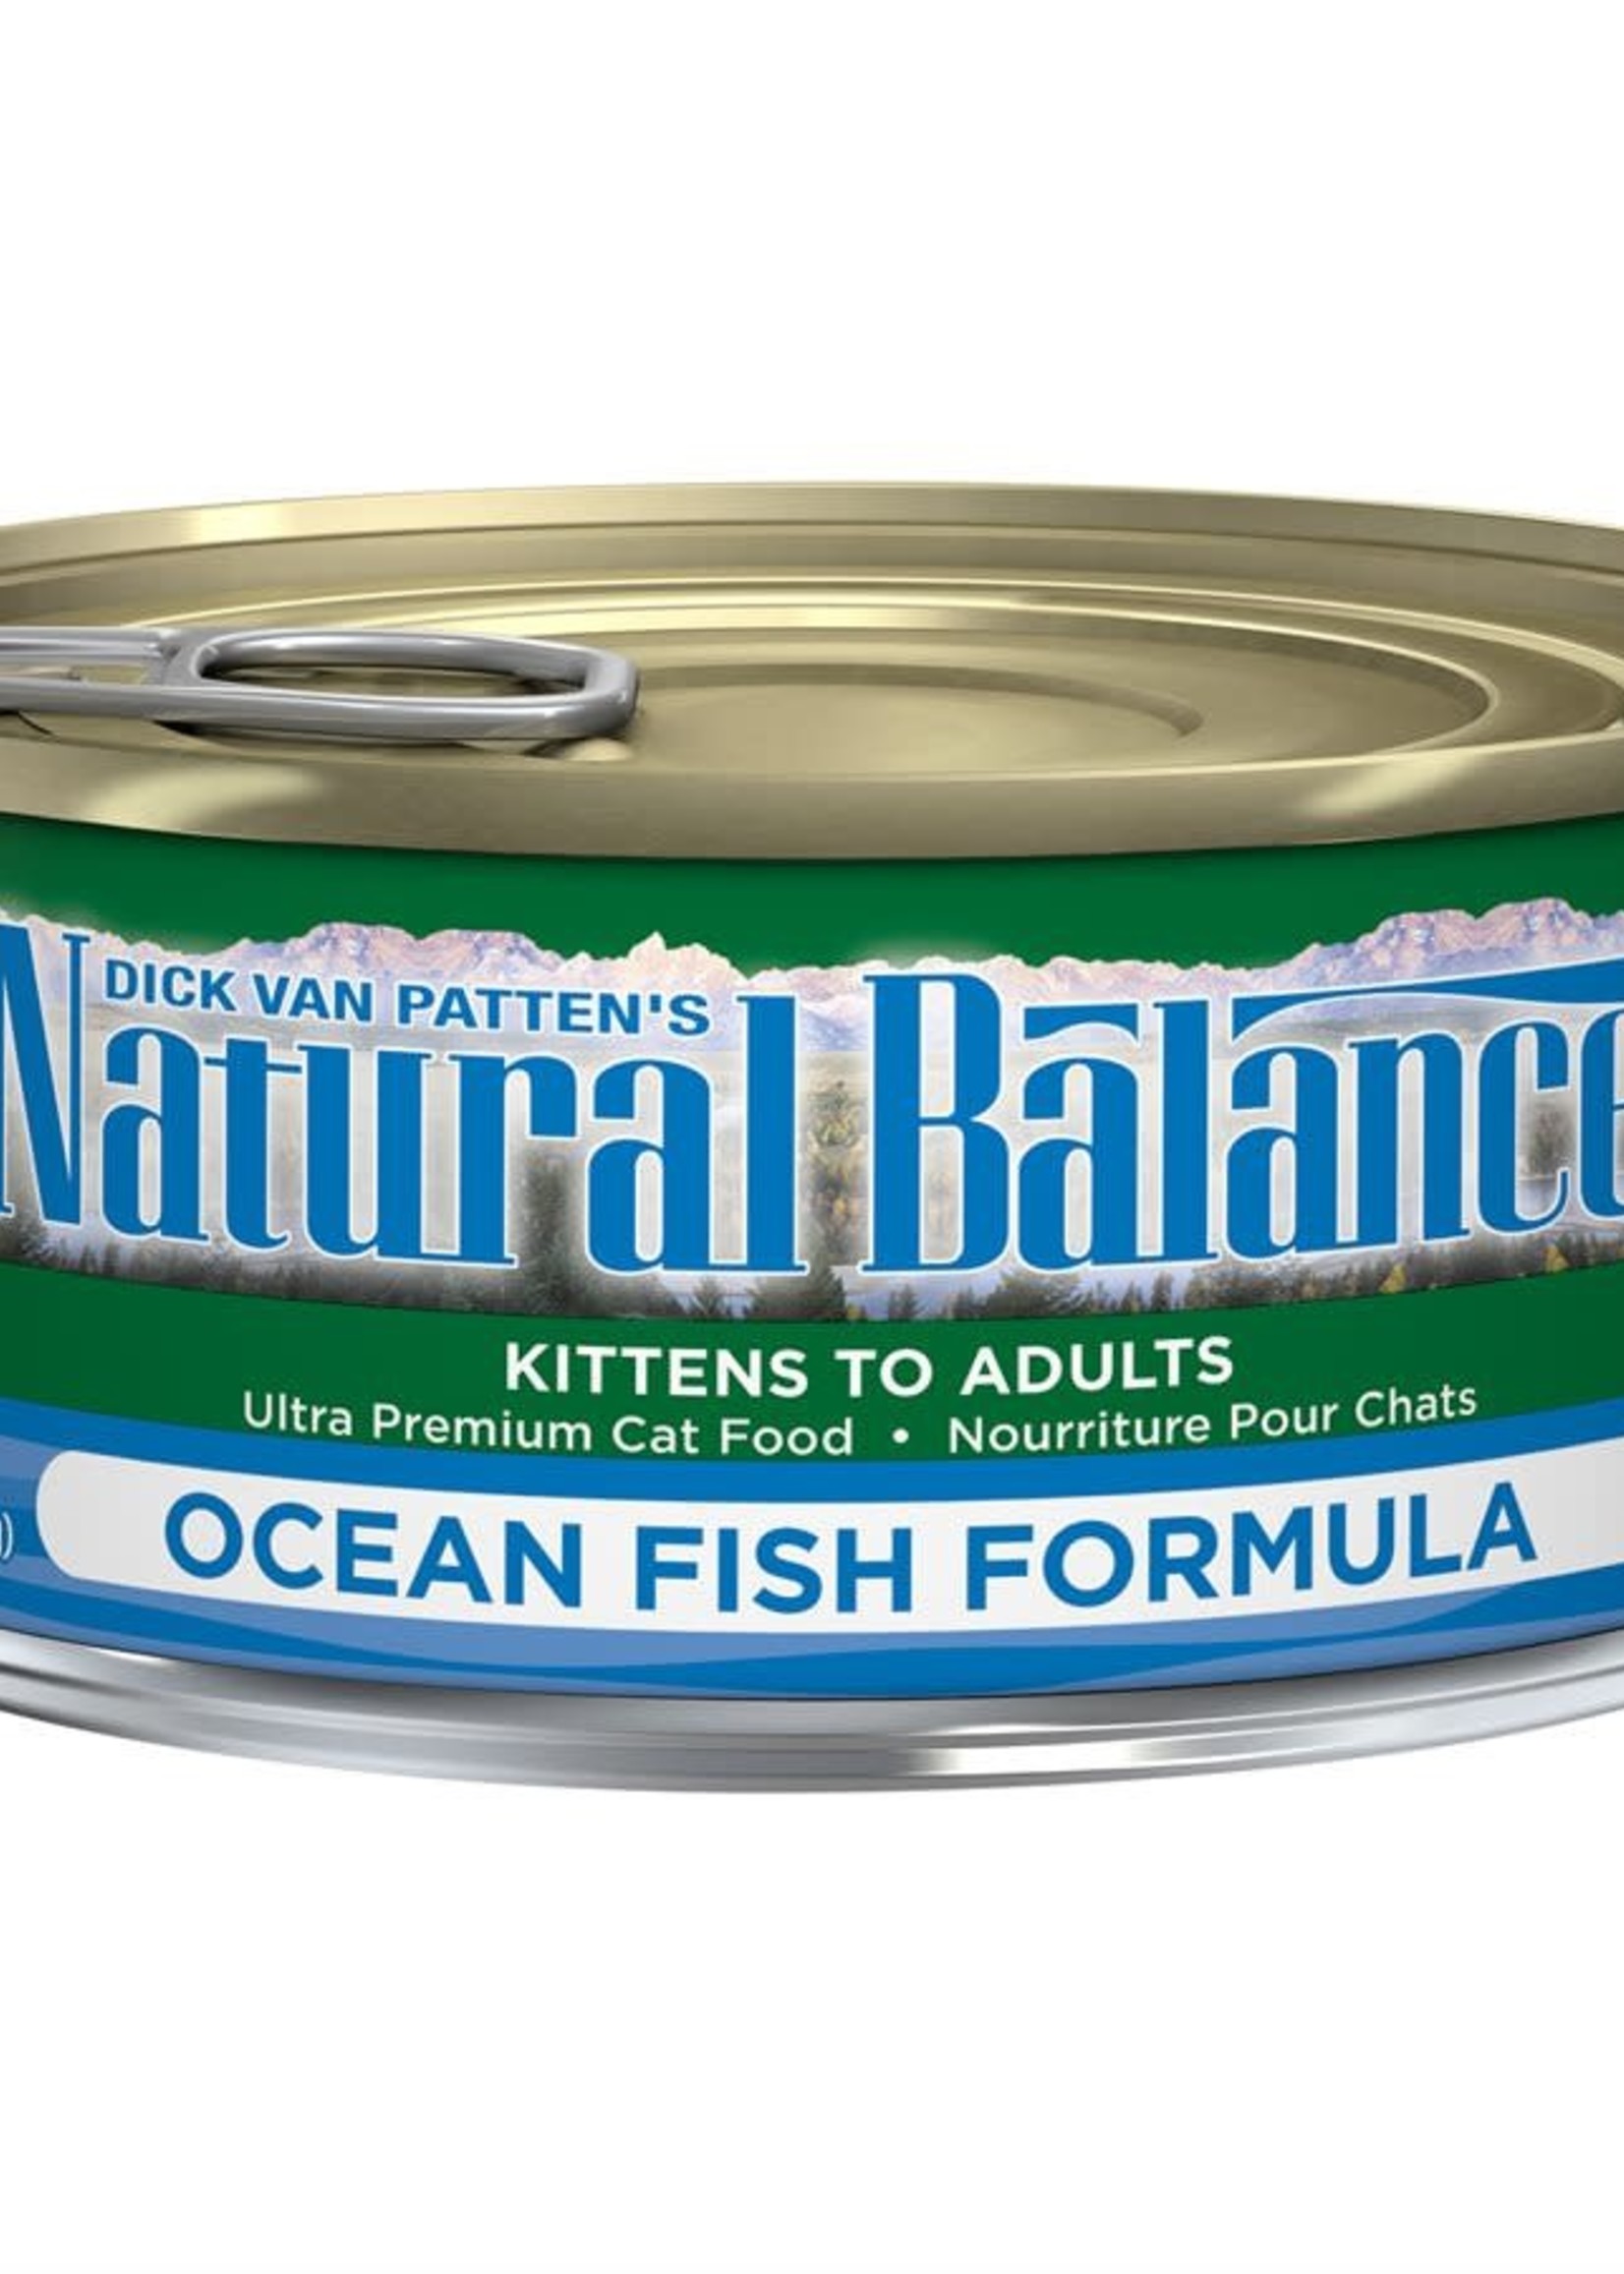 Natural Balance® NATURAL BALANCE OCEAN FISH FORMULA 5.5oz